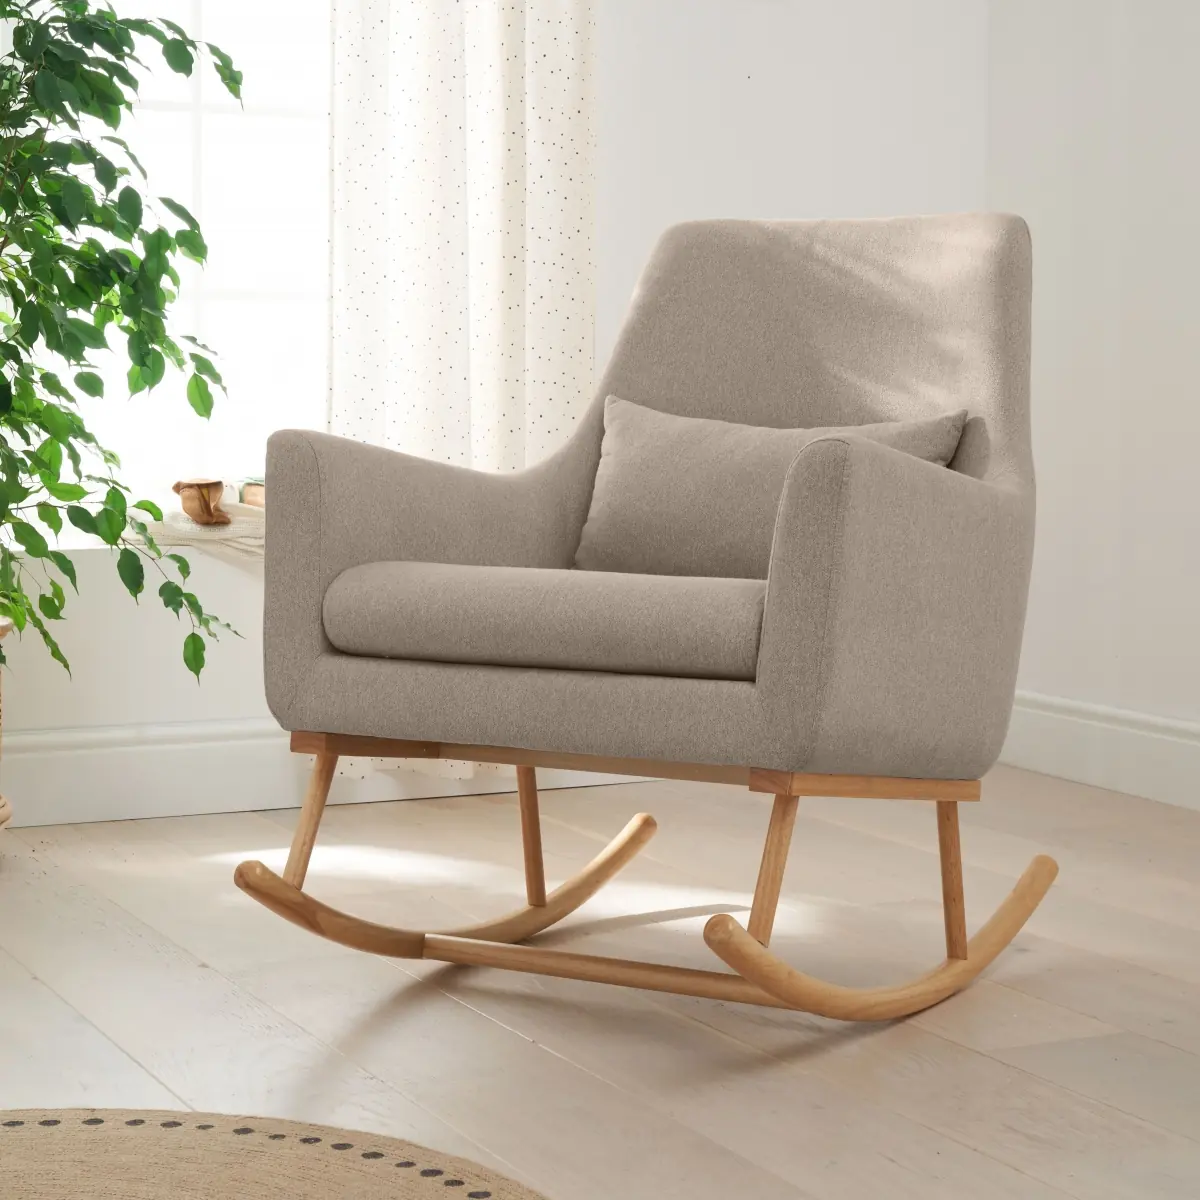 Image of Tutti Bambini Oscar Rocking Chair-Stone/Natural + Free Nursing Pillow Worth £59.99!